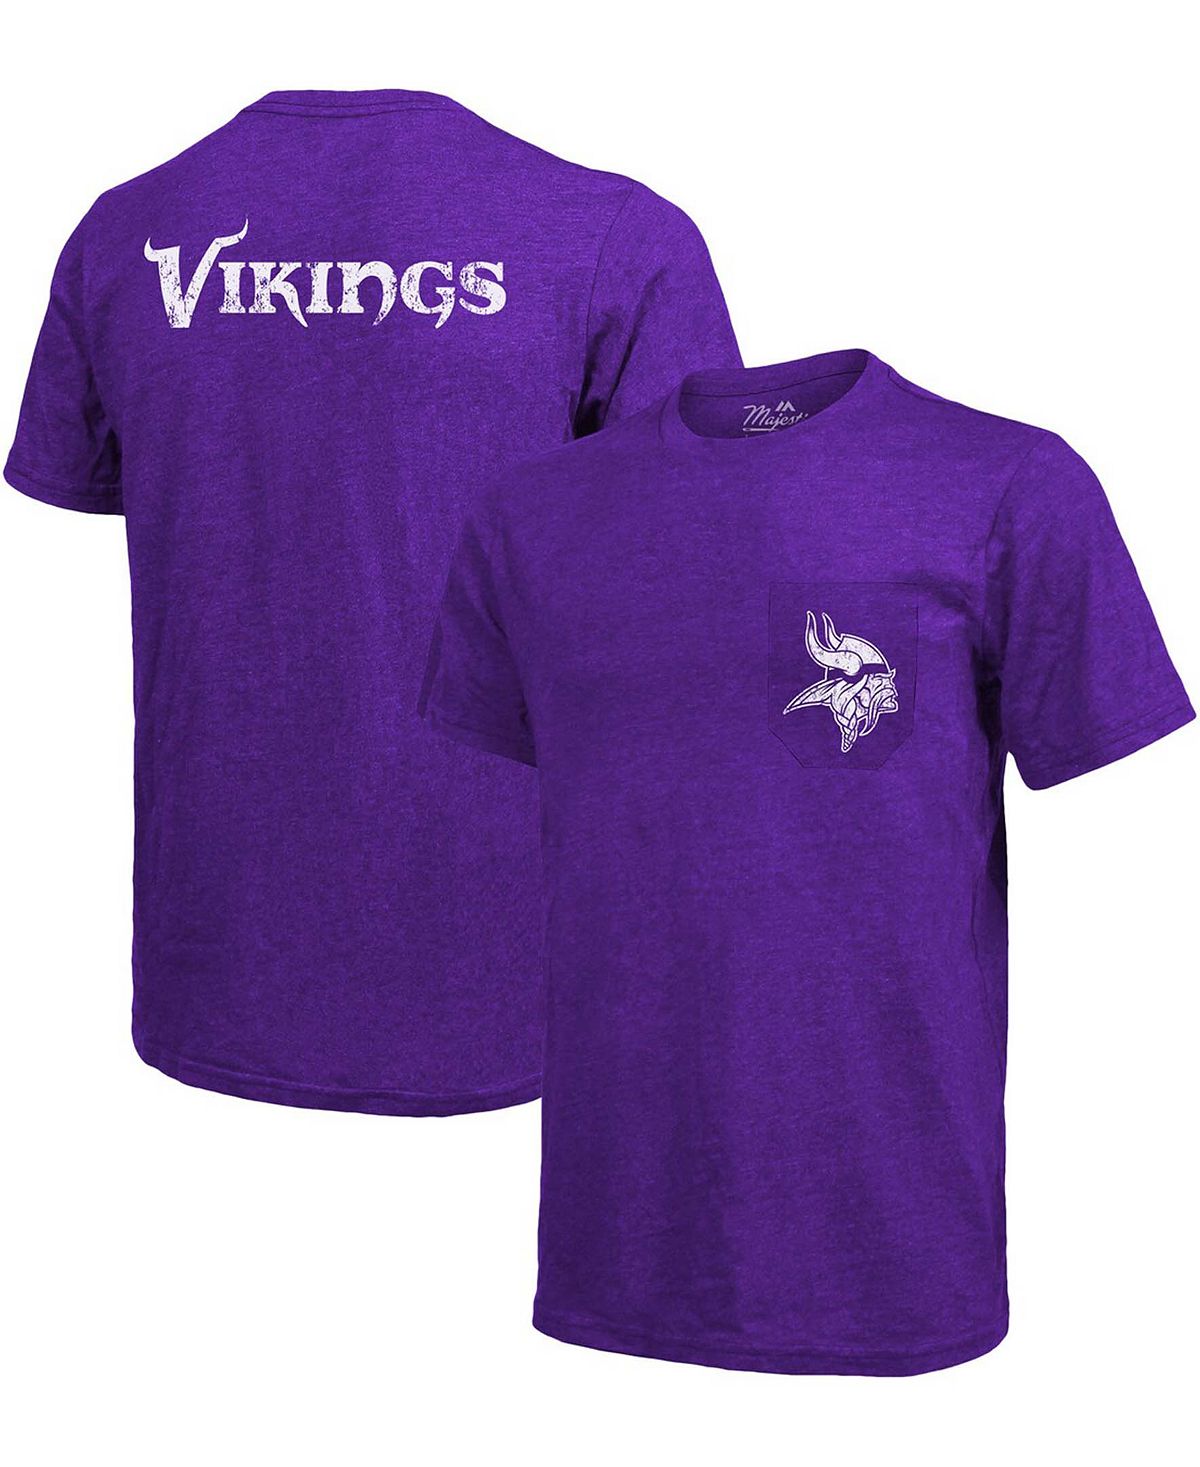 Футболка minnesota vikings tri-blend pocket pocket - пурпурный Majestic, фиолетовый футболка с карманами tri blend arizona cardinals threads cardinal majestic